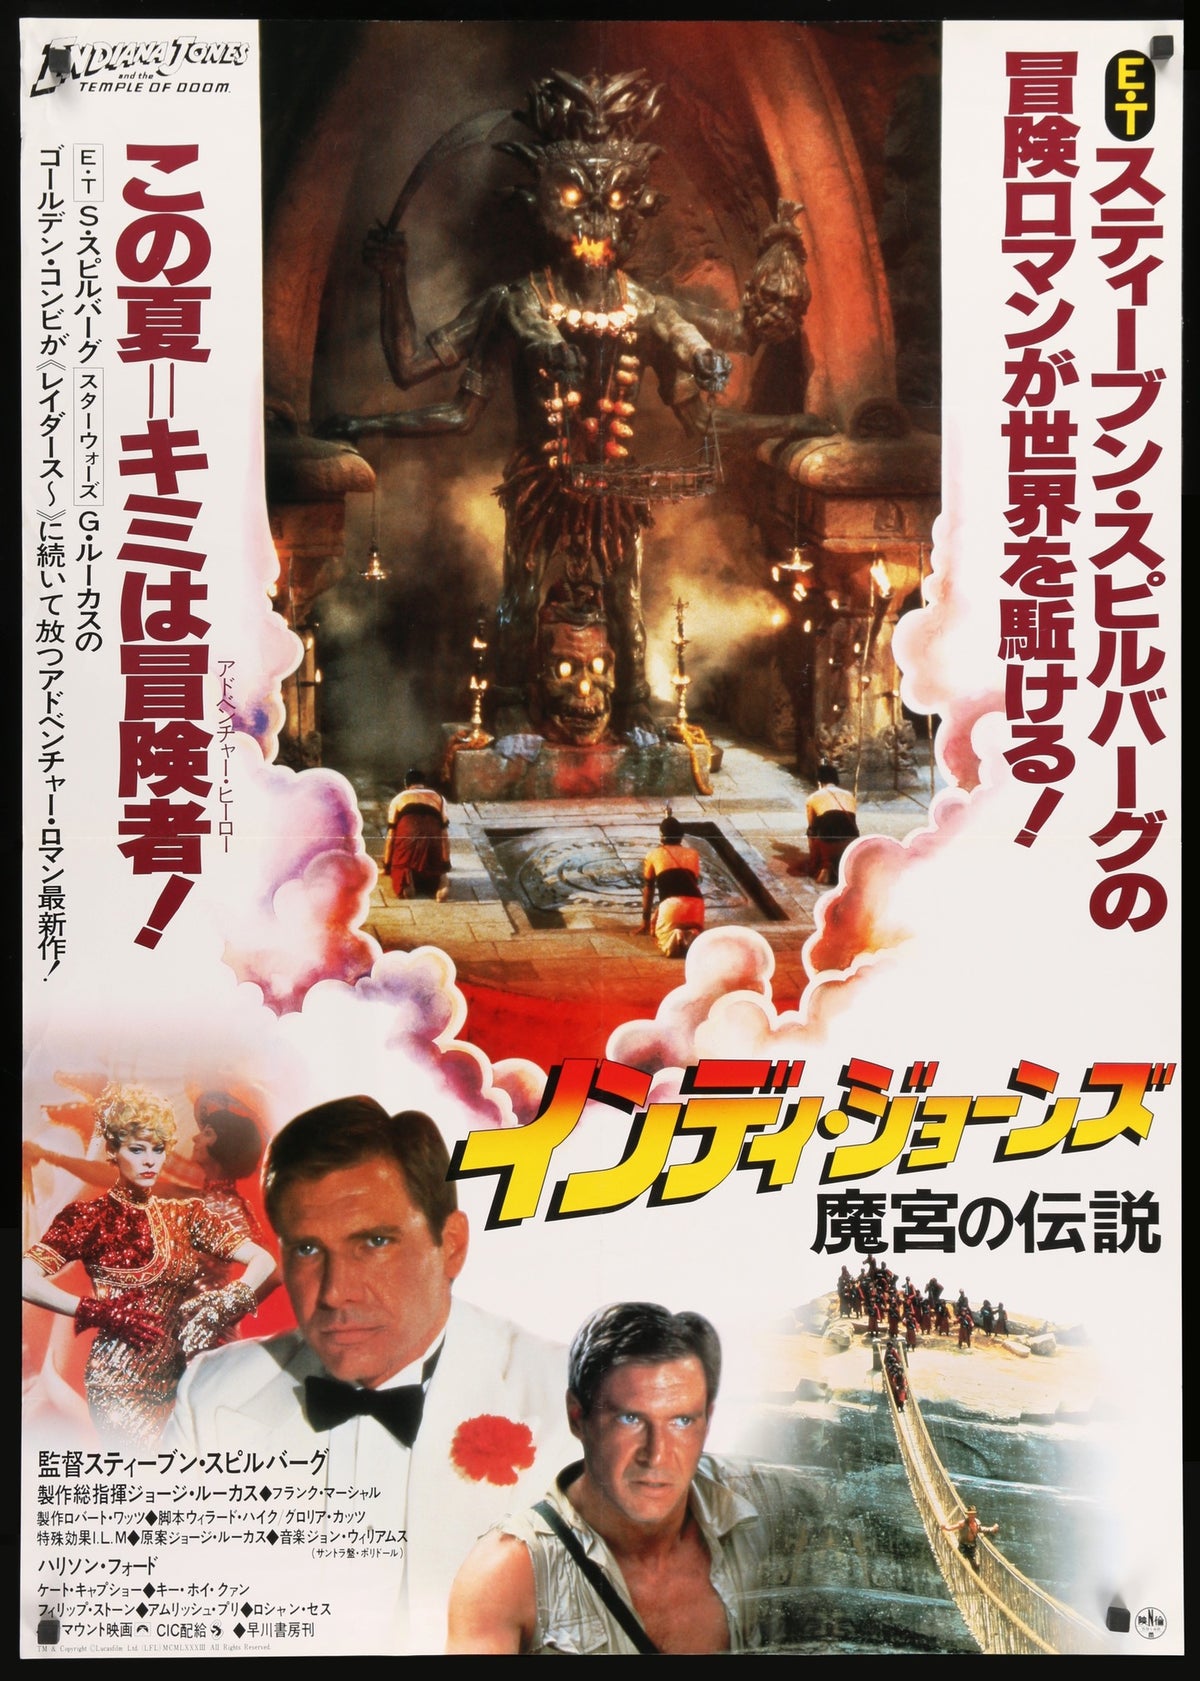 Indiana Jones and the Temple of Doom (1984) original movie poster for sale at Original Film Art